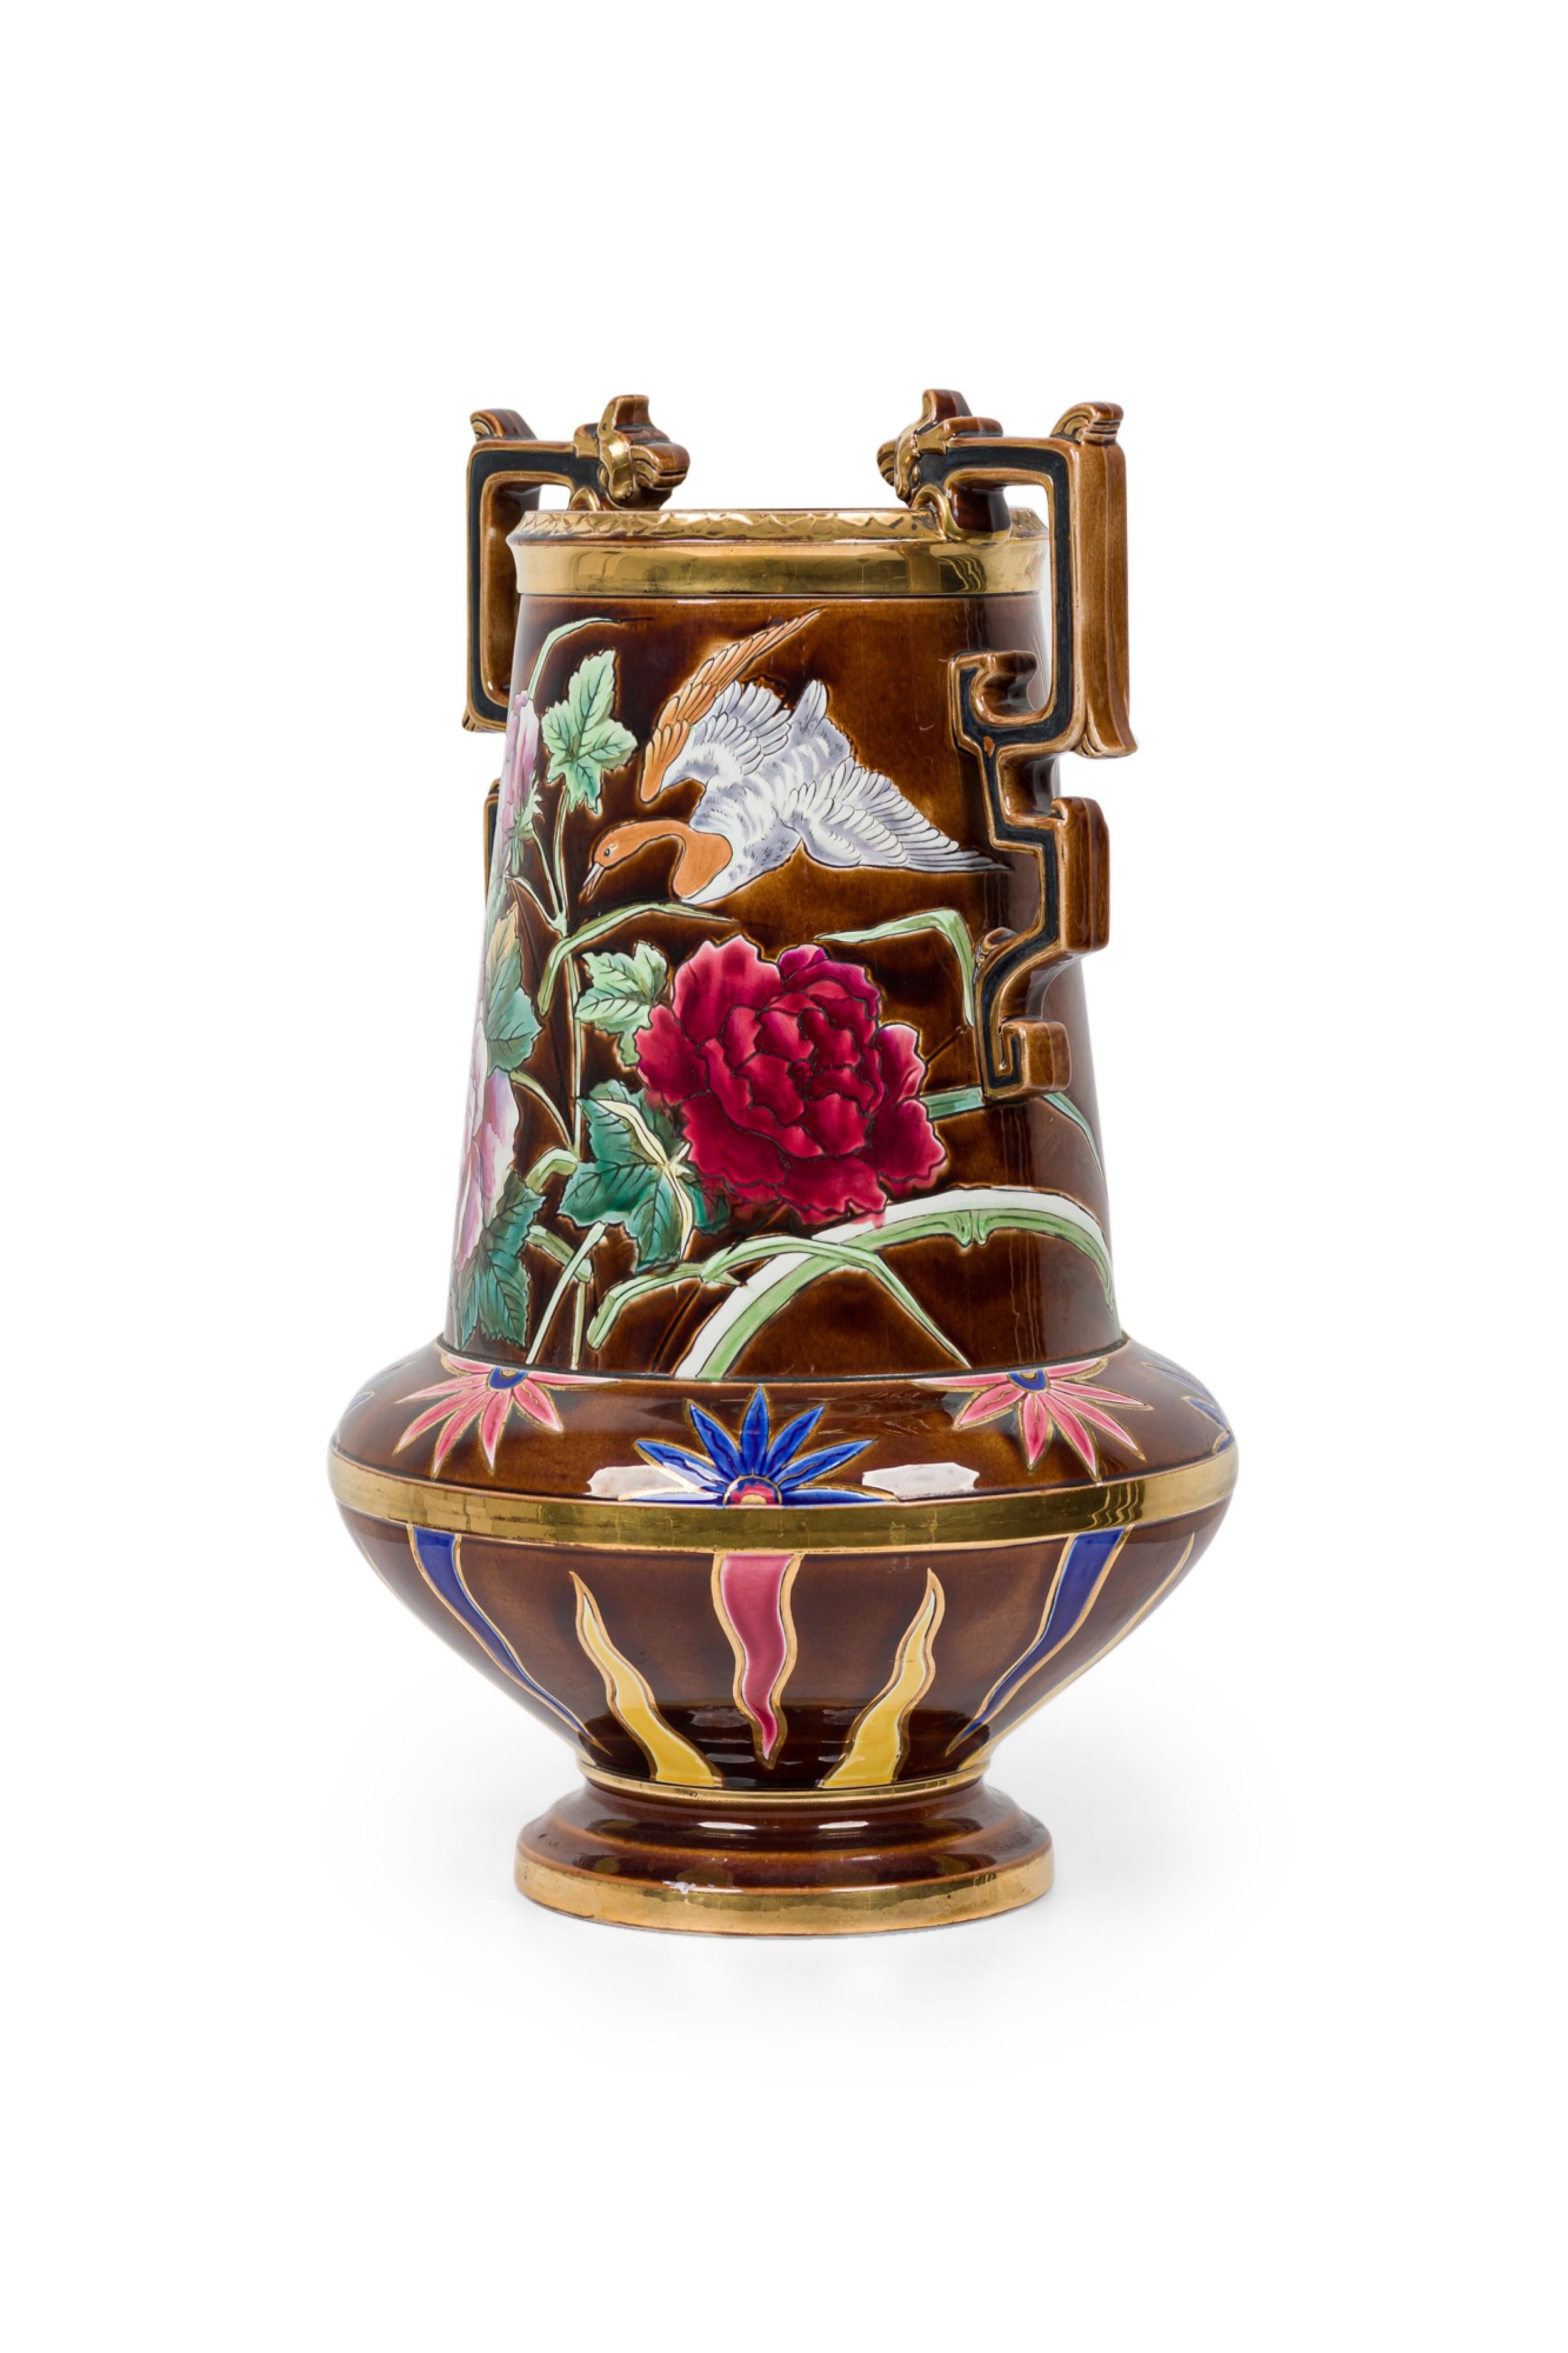 Dutch Victorian Aesthetic Movement Monumental Gilt Painted Ceramic Vessel For Sale 4